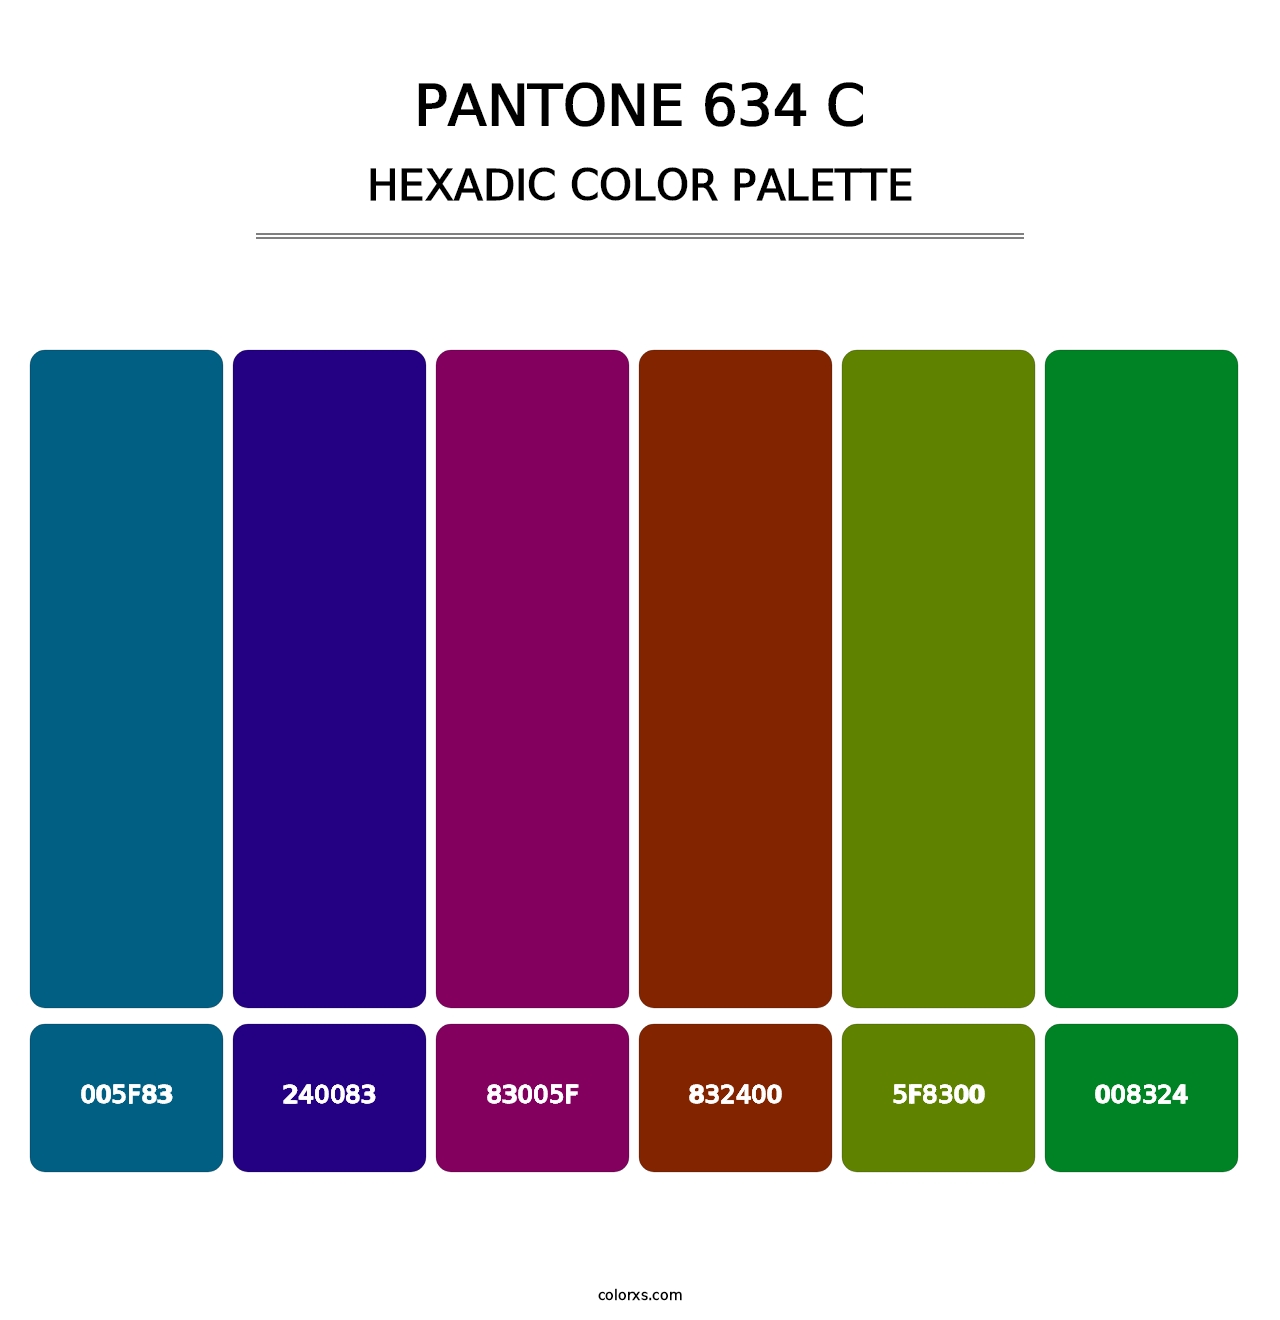 PANTONE 634 C - Hexadic Color Palette